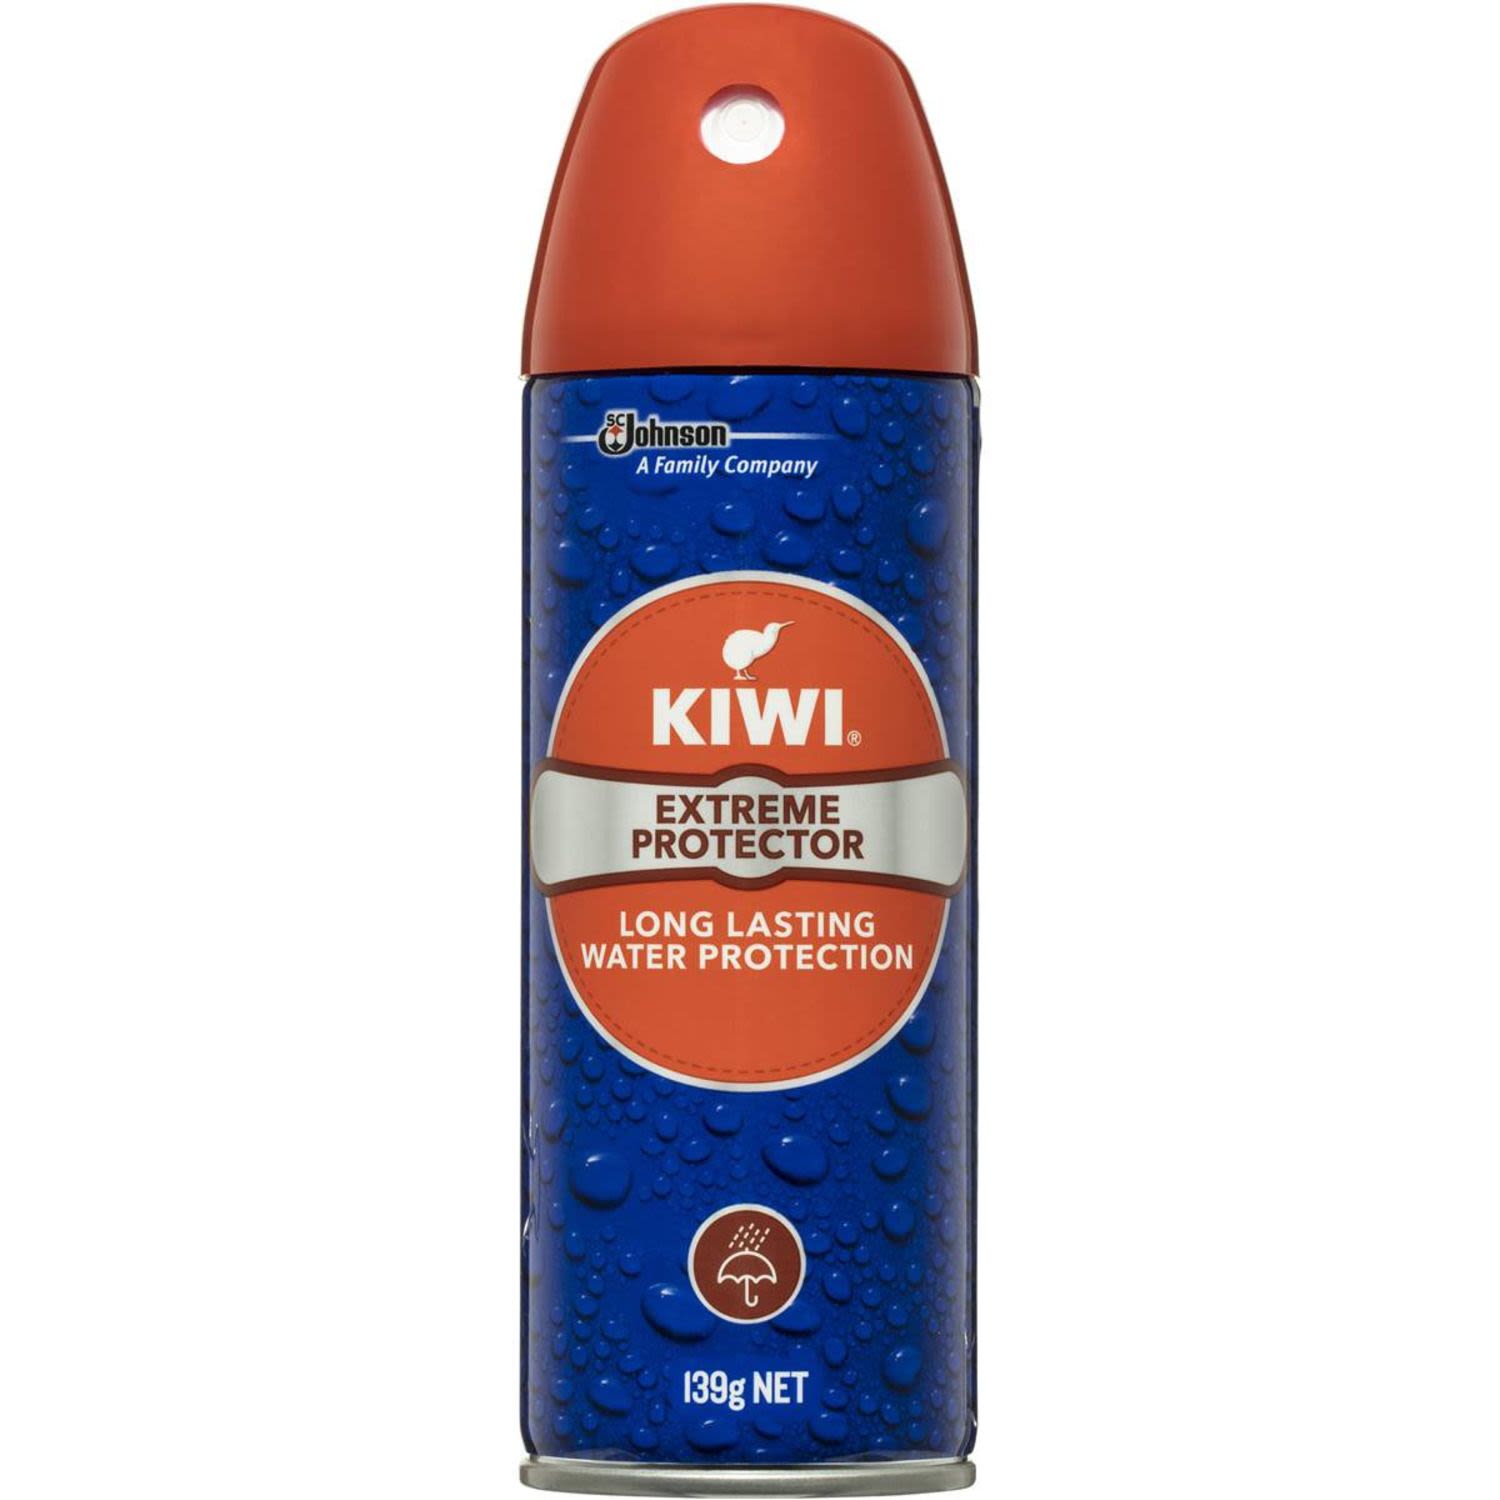 Kiwi Extreme Protector, 139 Gram